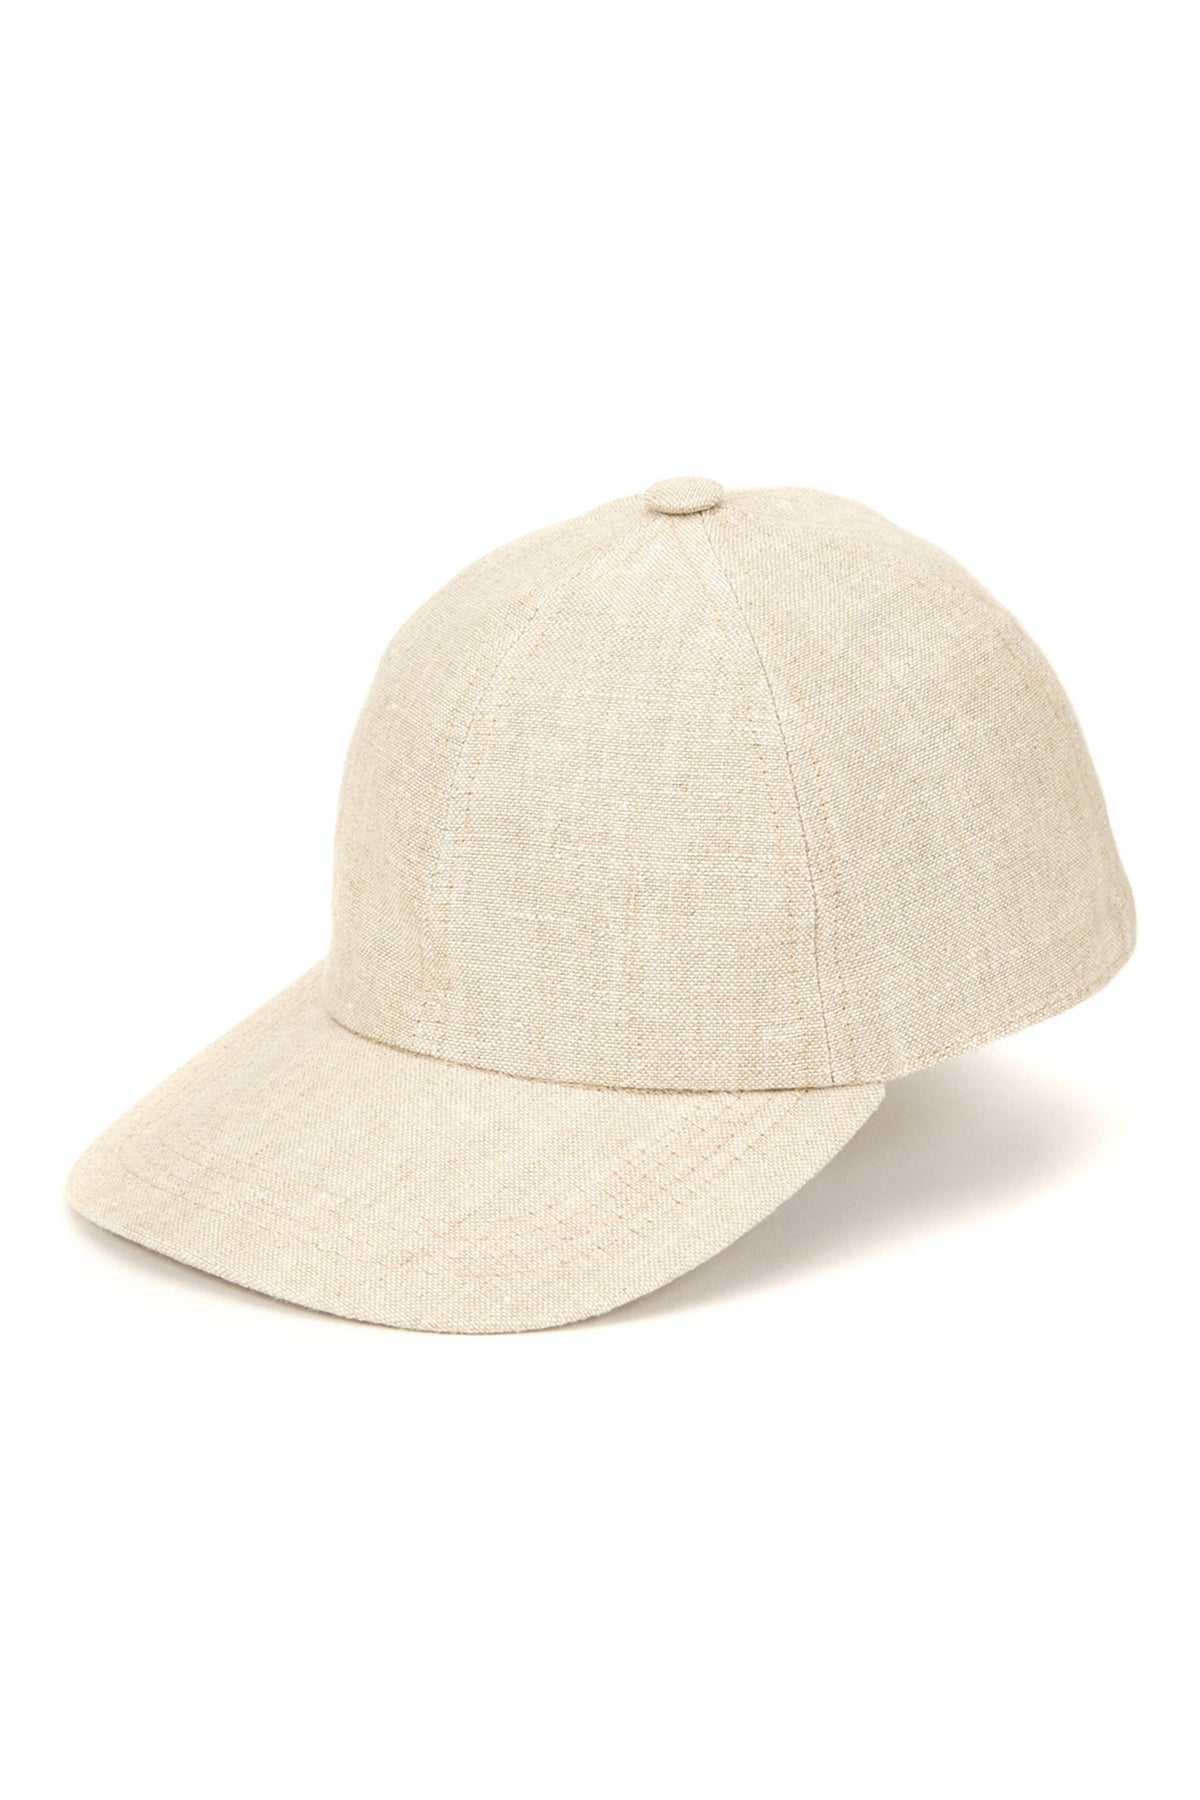 Lock & & Cap Rimini Baseball Co. for Hats - Men Women